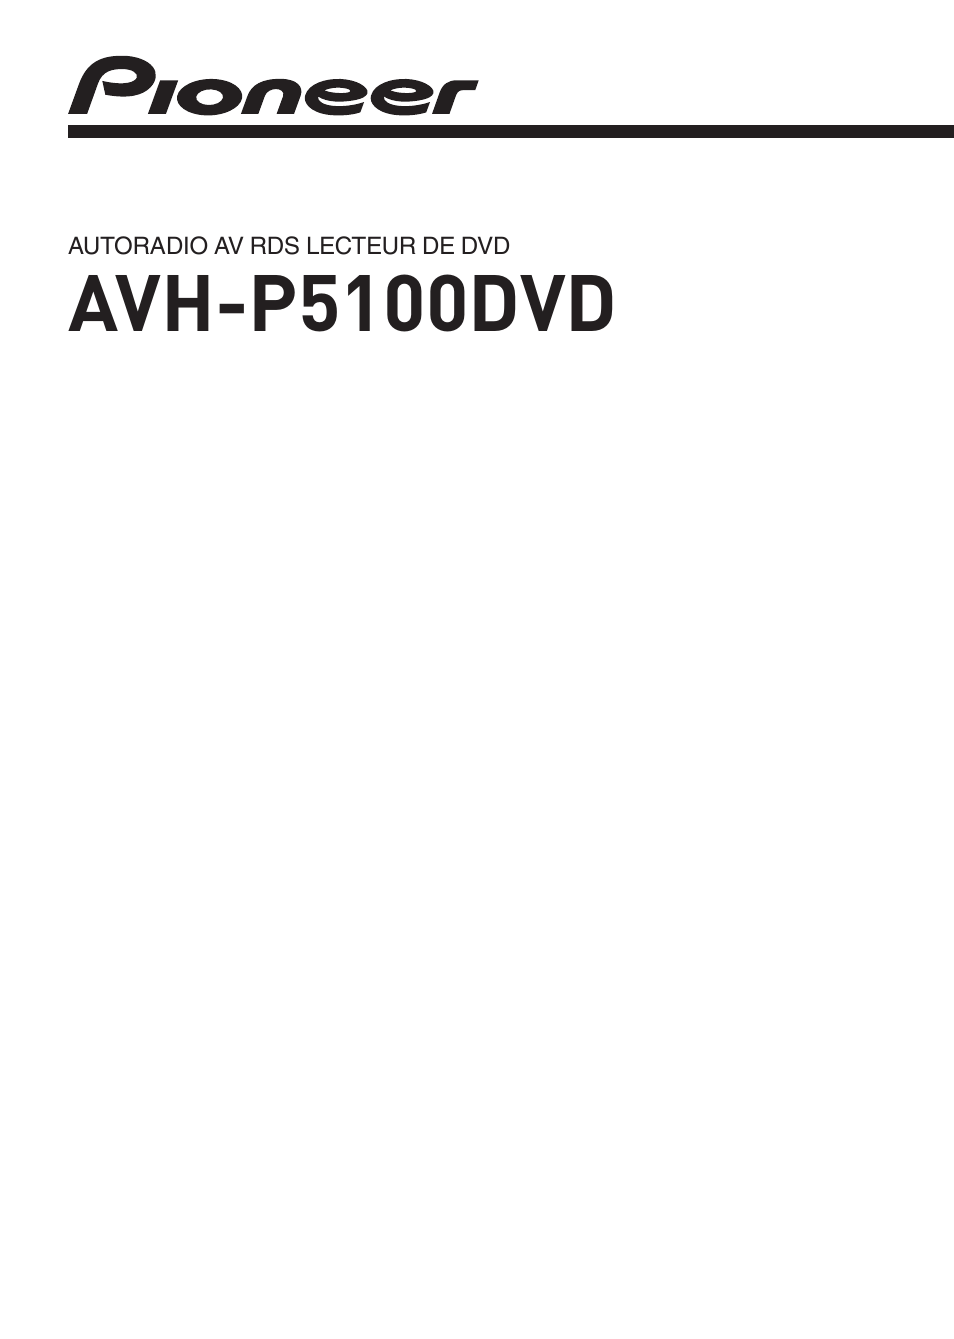 Pioneer AVH-P5100DVD Manuel d'utilisation | Pages: 113